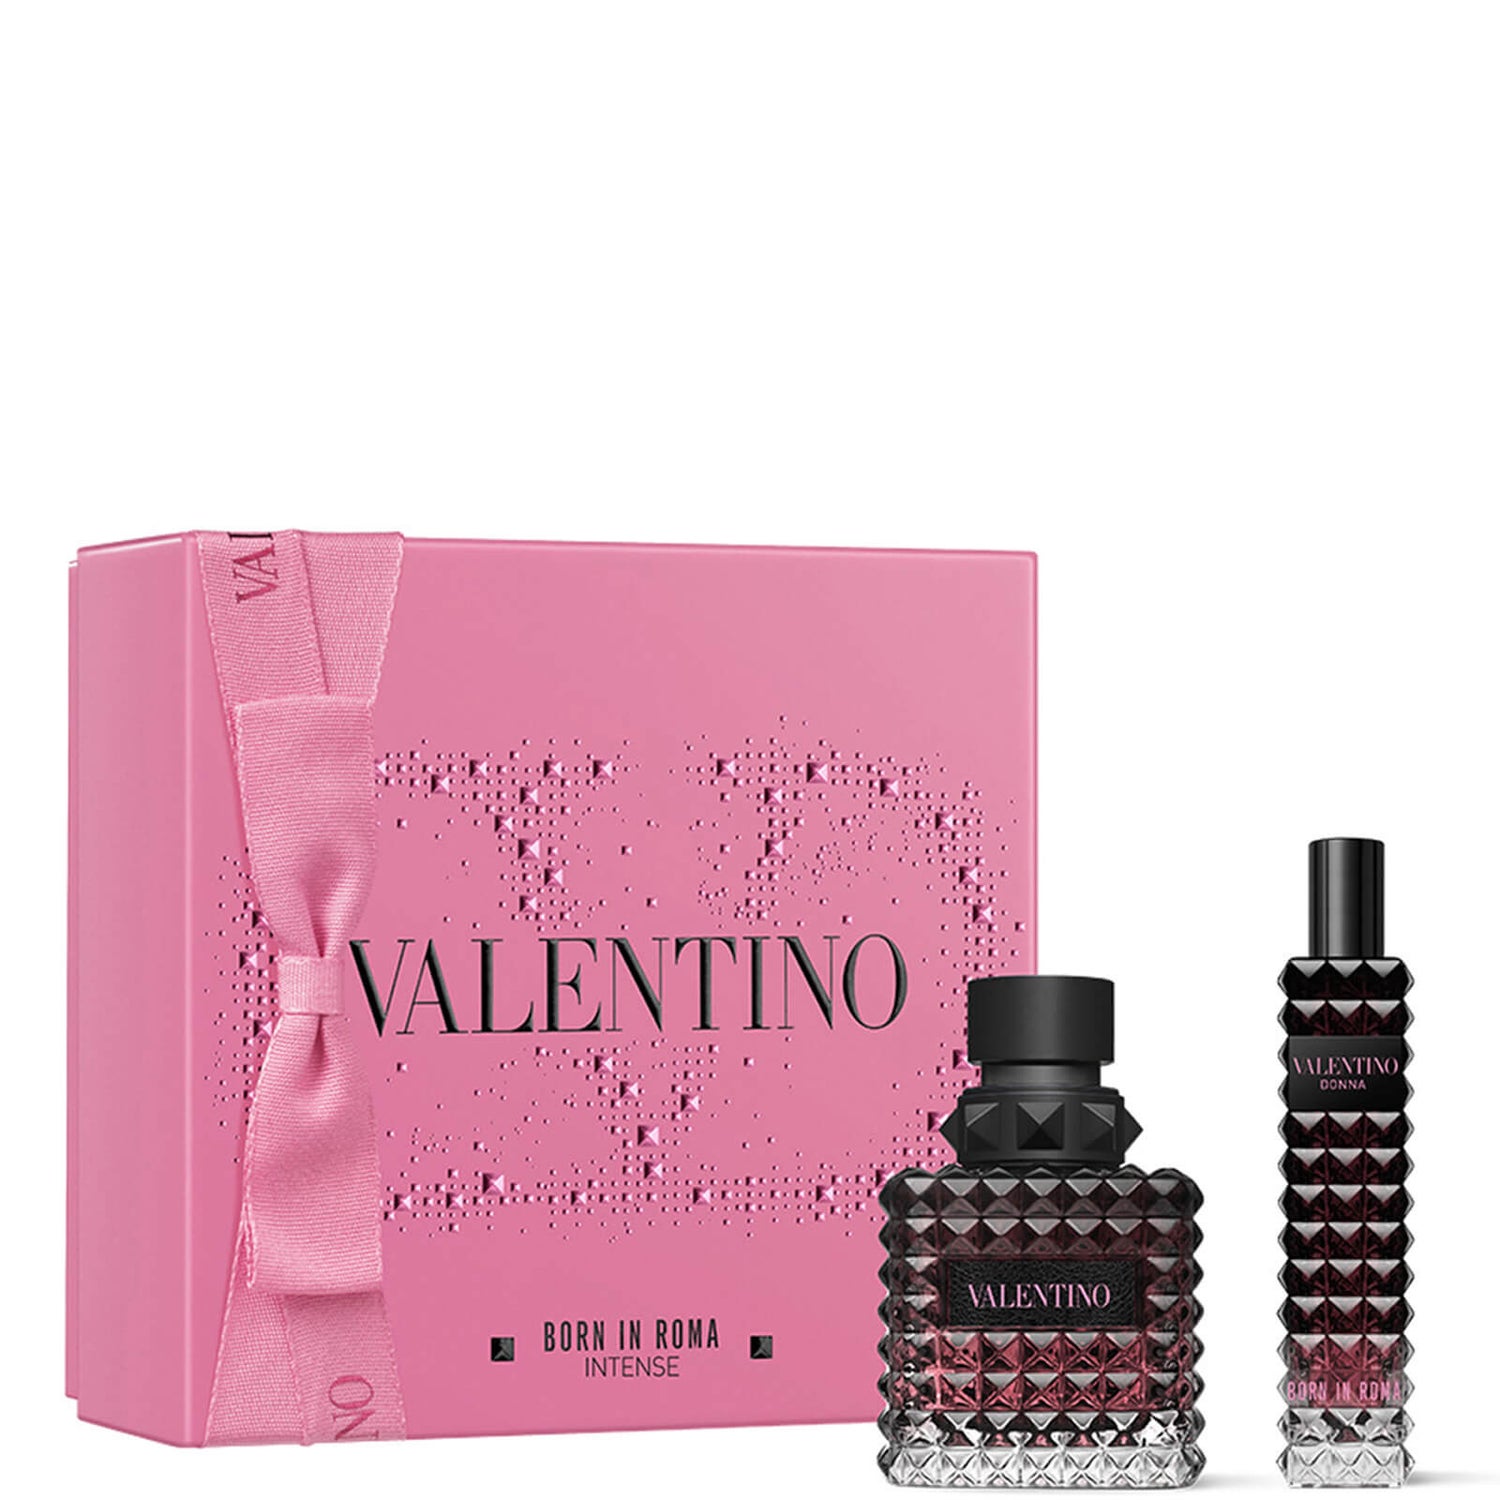 Valentino Born in Roma Donna intense 50ml Eau de Parfum Gift Set (Worth ...